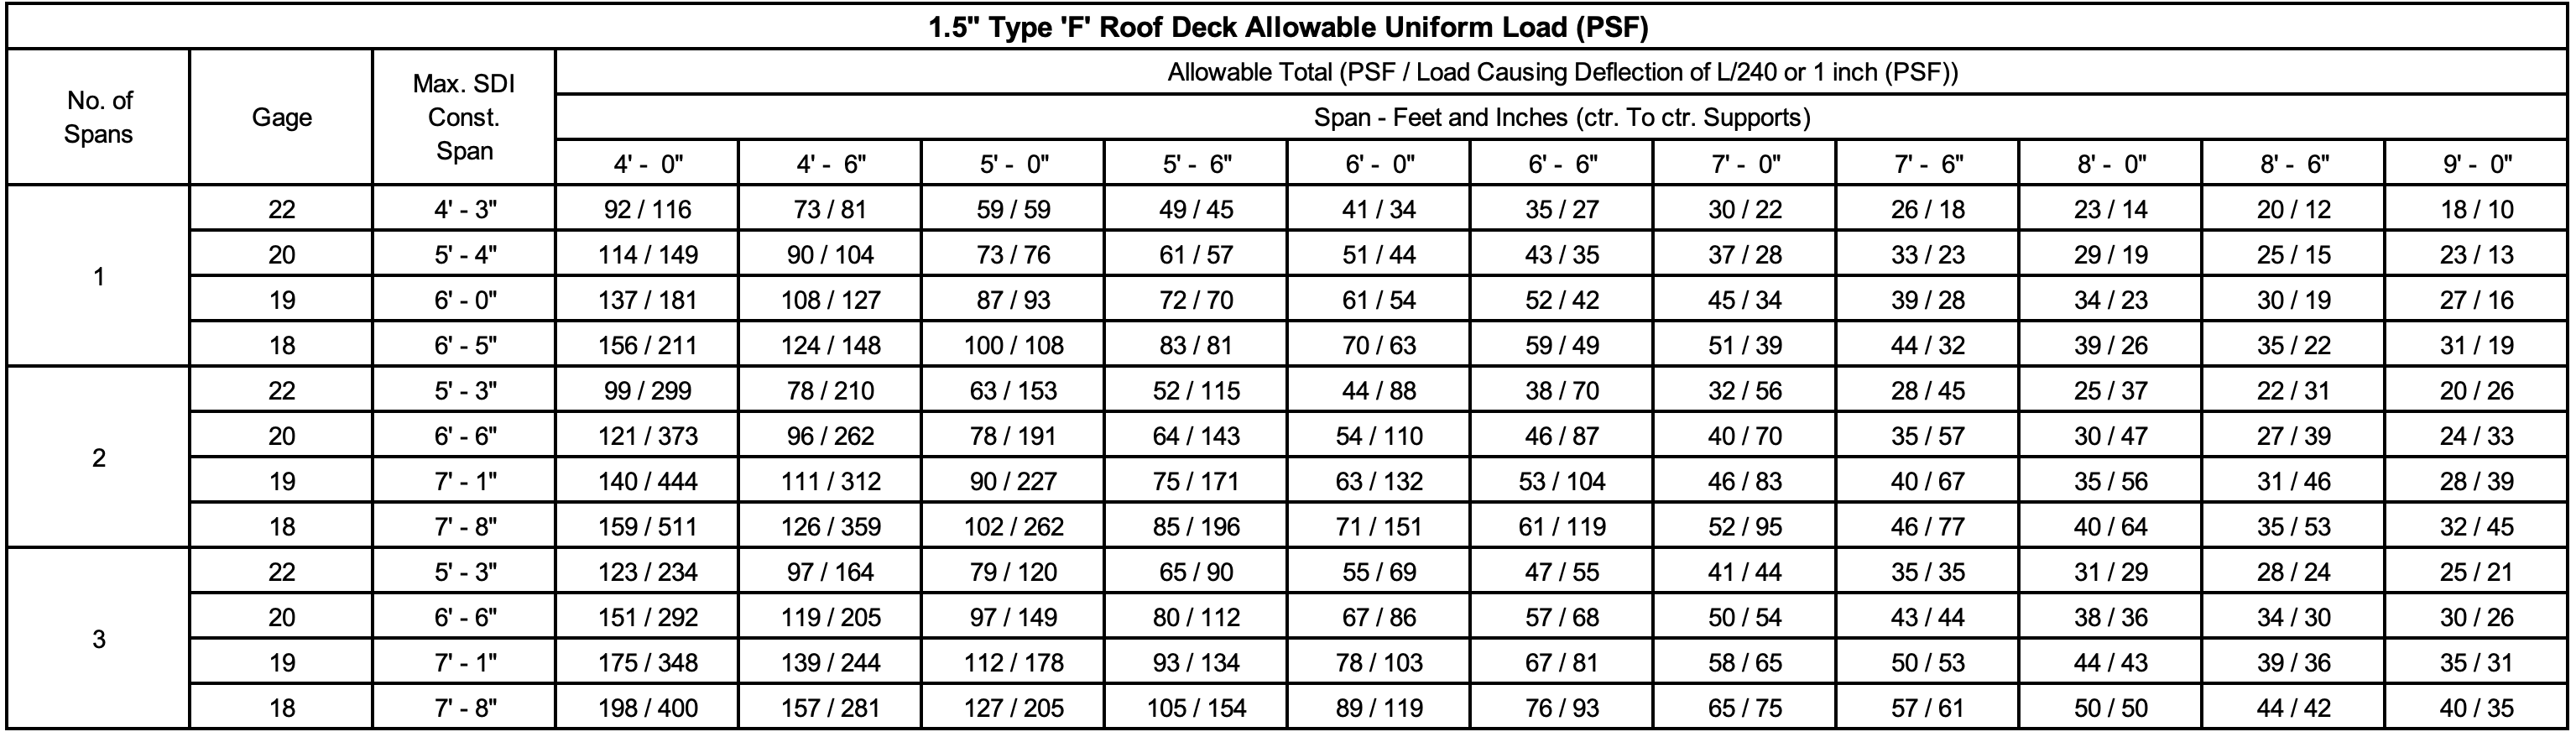 Cordeck 1.5 F Roof Deck Uniform Load Table